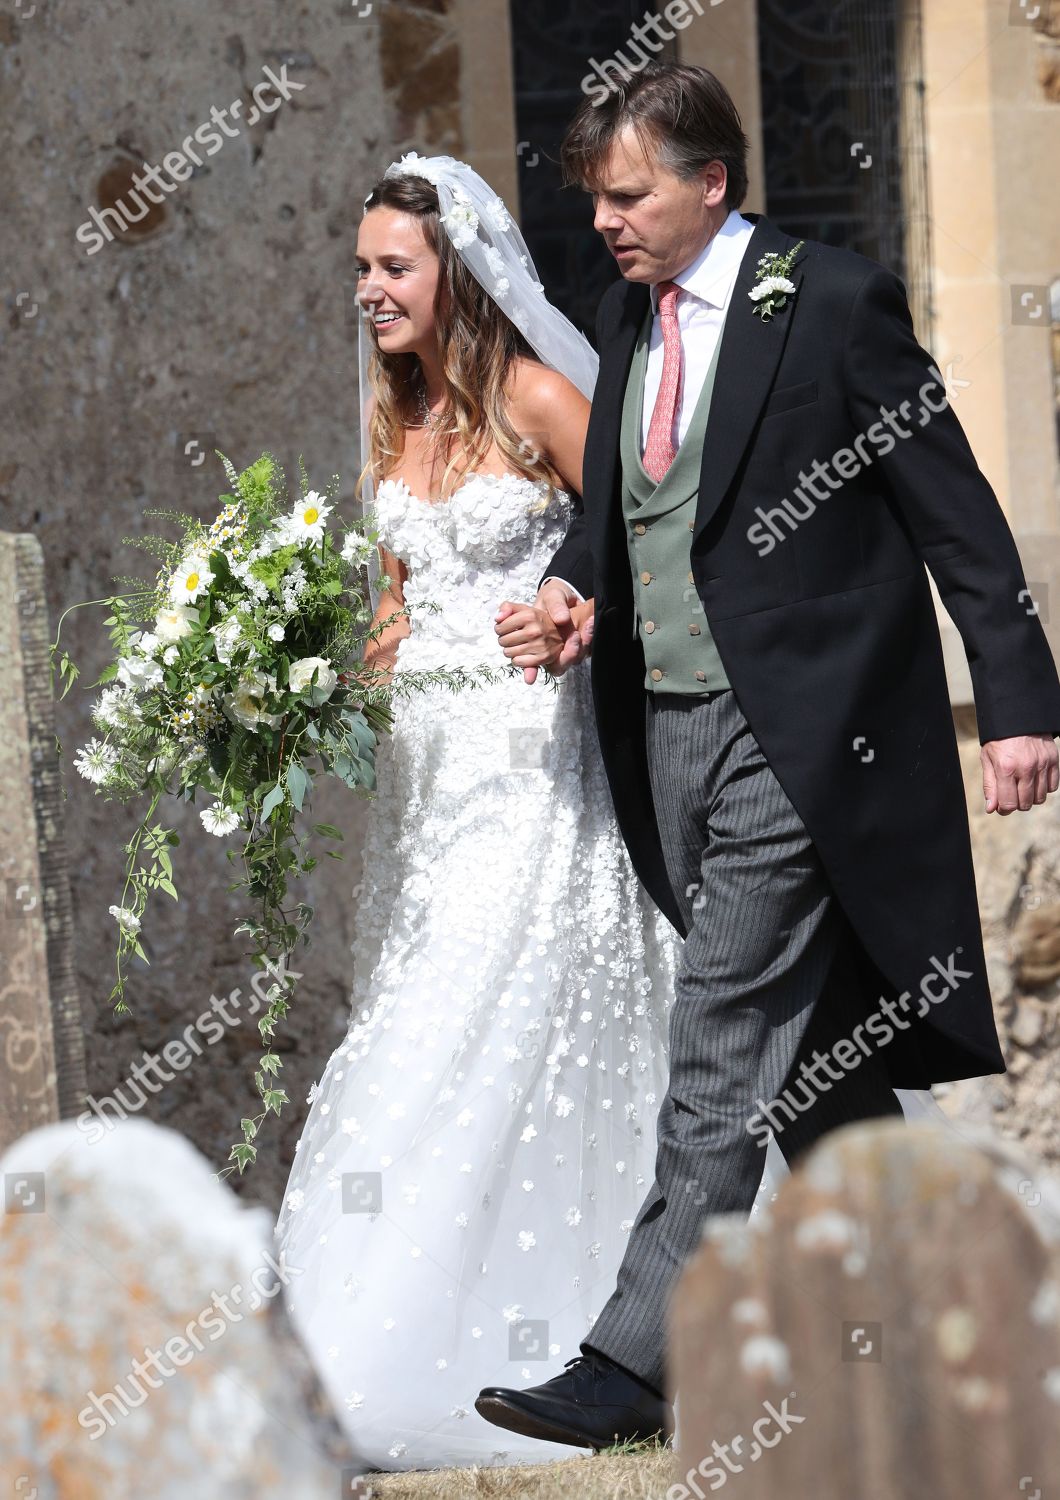 the-wedding-of-daisy-jenks-and-charlie-van-straubenzee-st-mary-the-virgin-church-frensham-surrey-uk-shutterstock-editorial-9779678ad.jpg